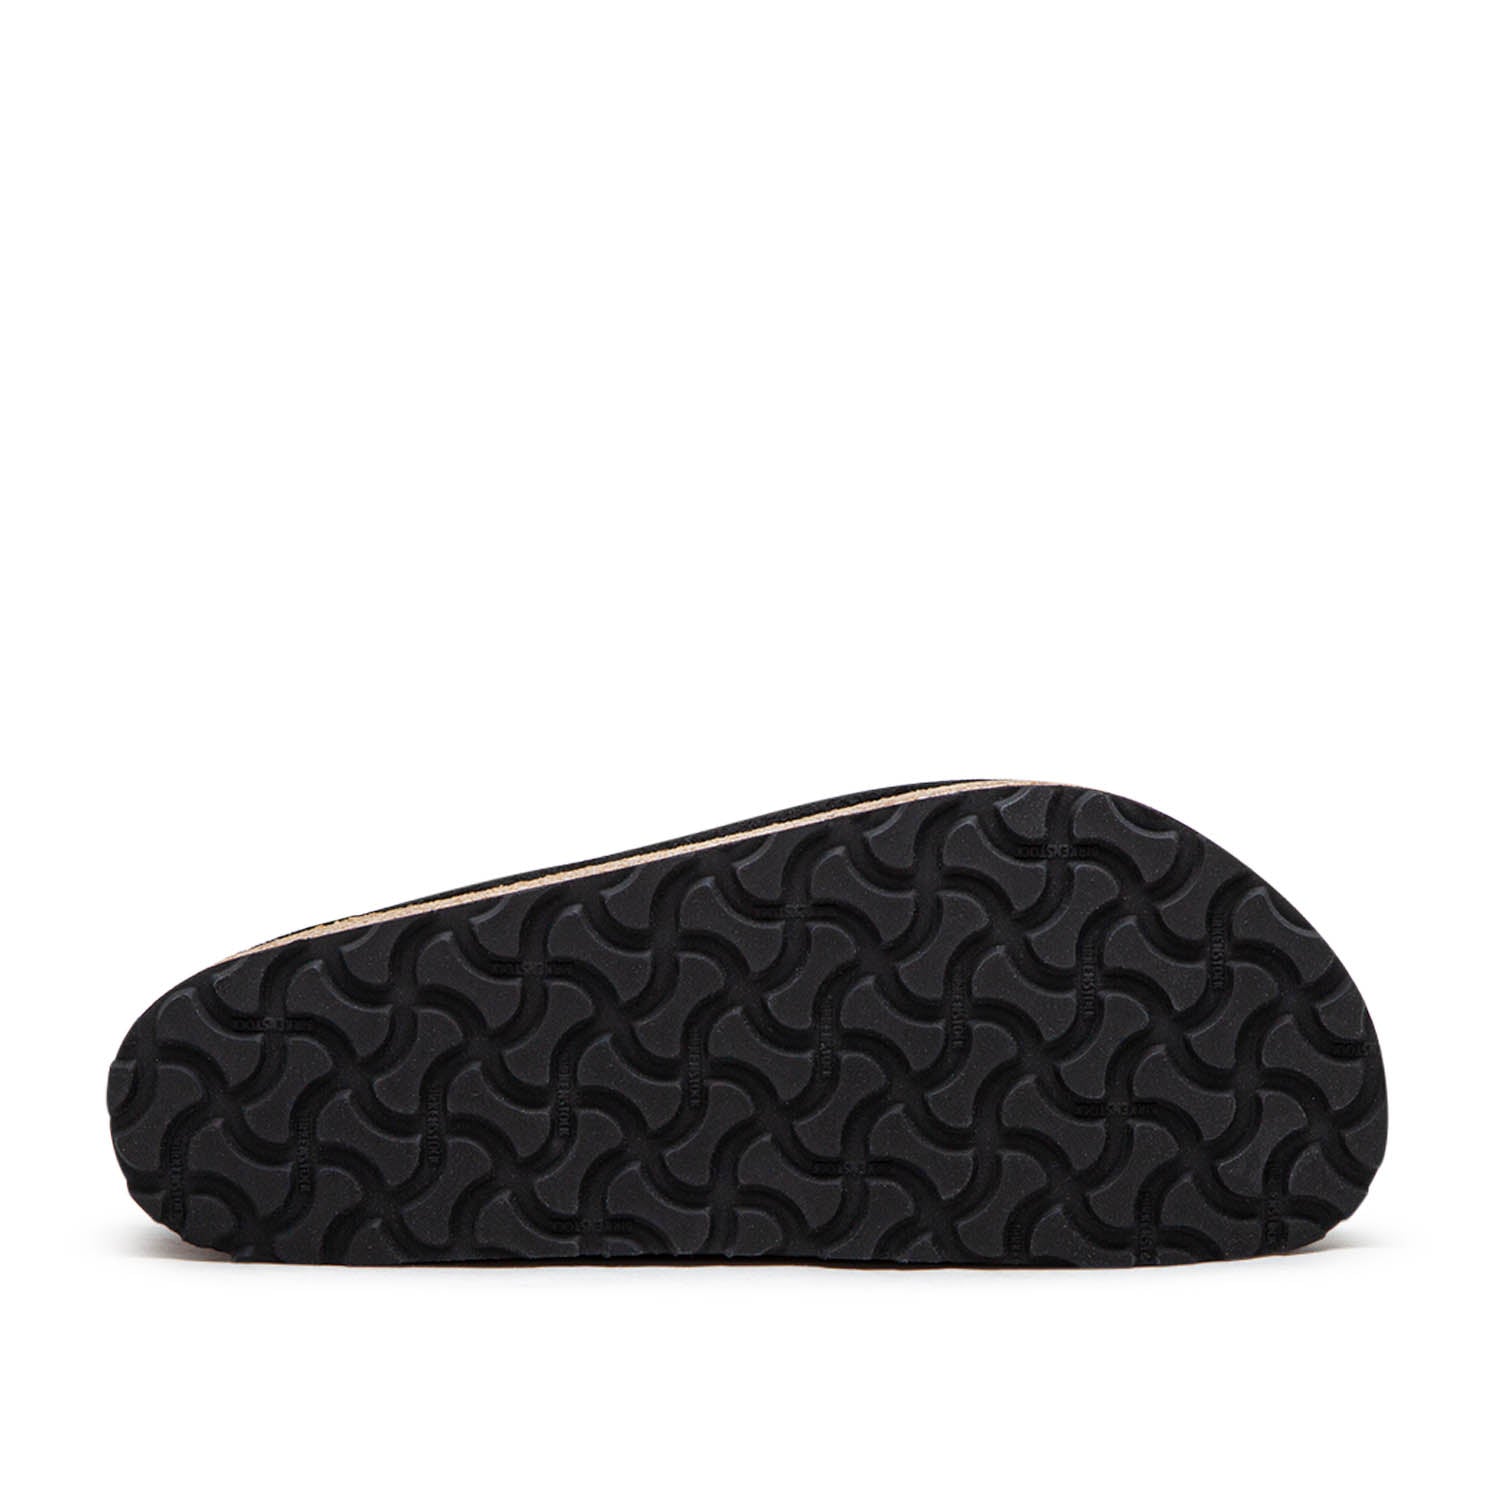 Birkenstock Naples Suede Leather (Schwarz)  - Cheap Cerbe Jordan Outlet